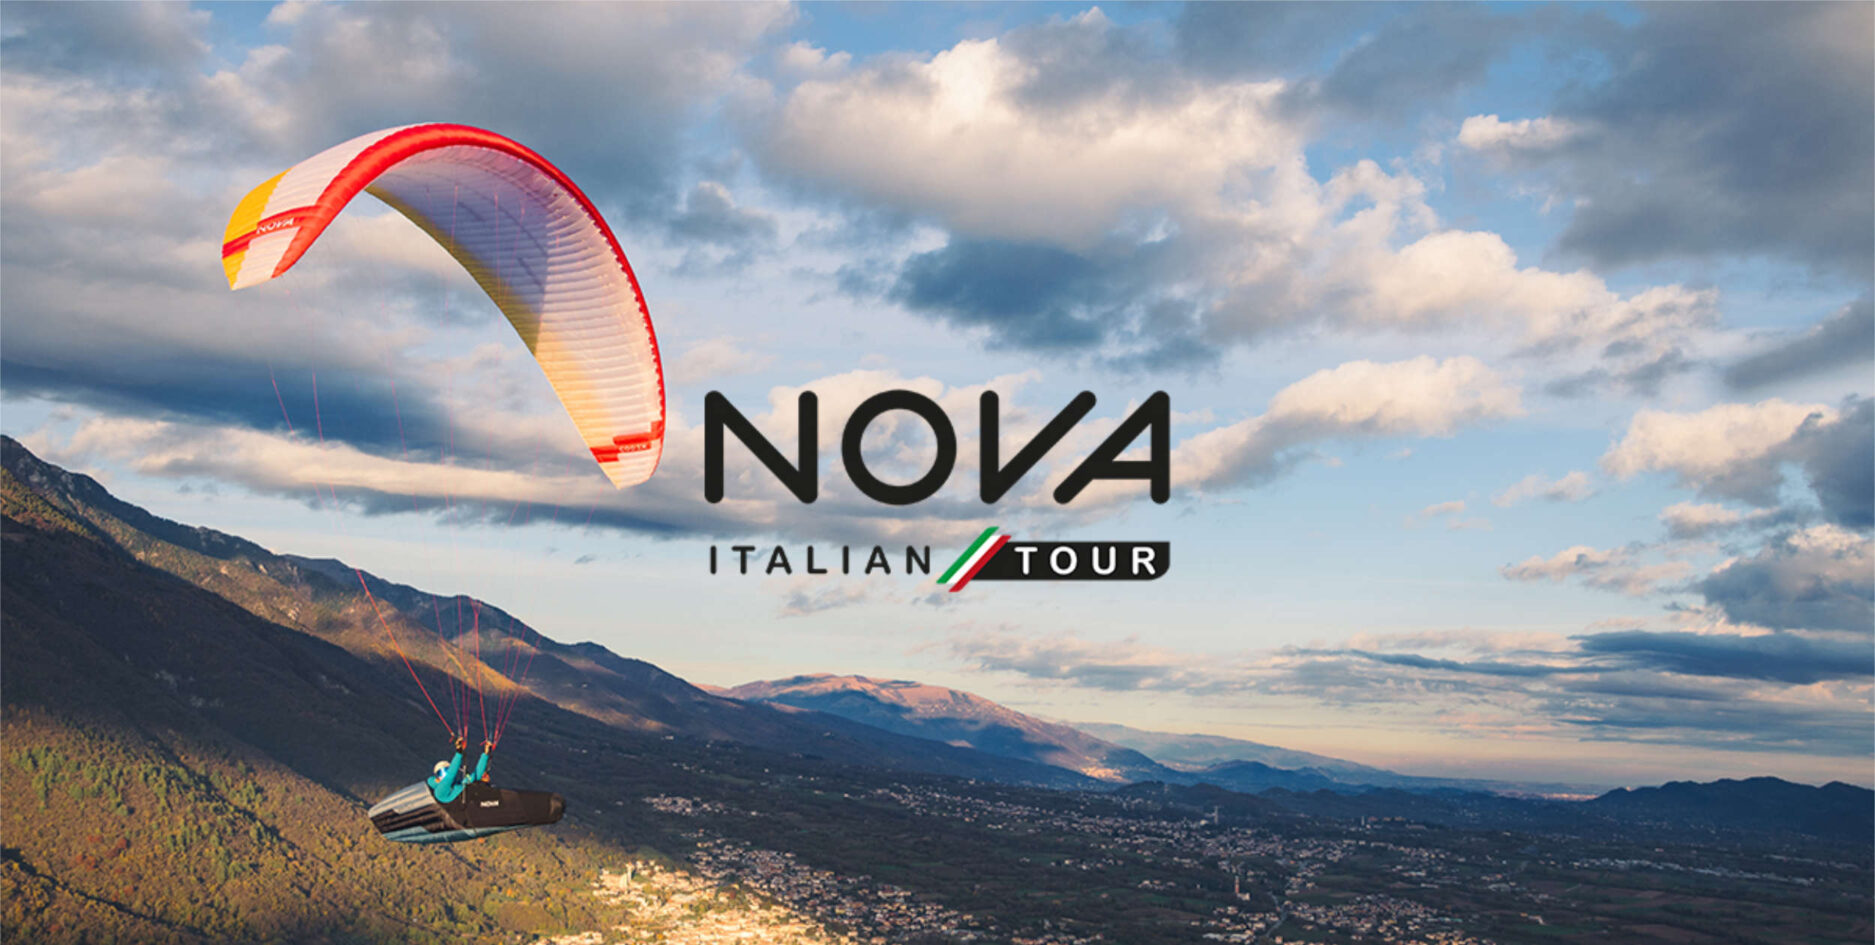 Nova Italian tour